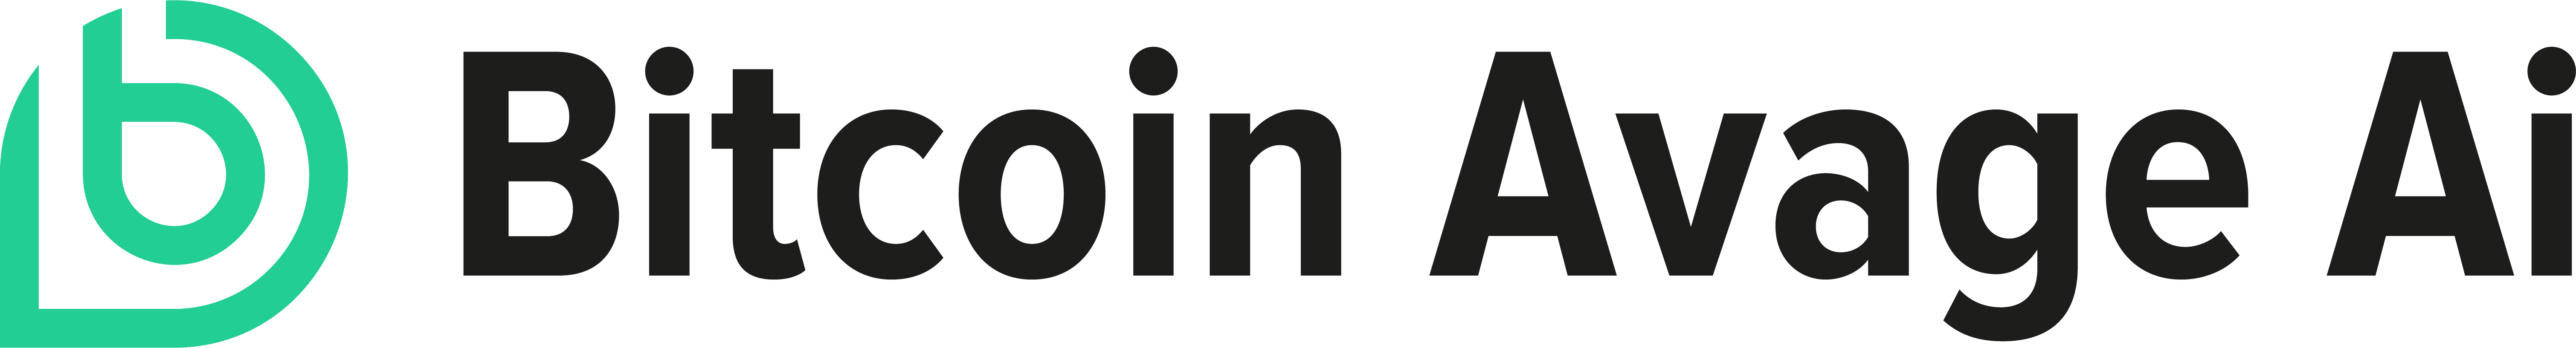 Bitcoin Avage Ai Logo